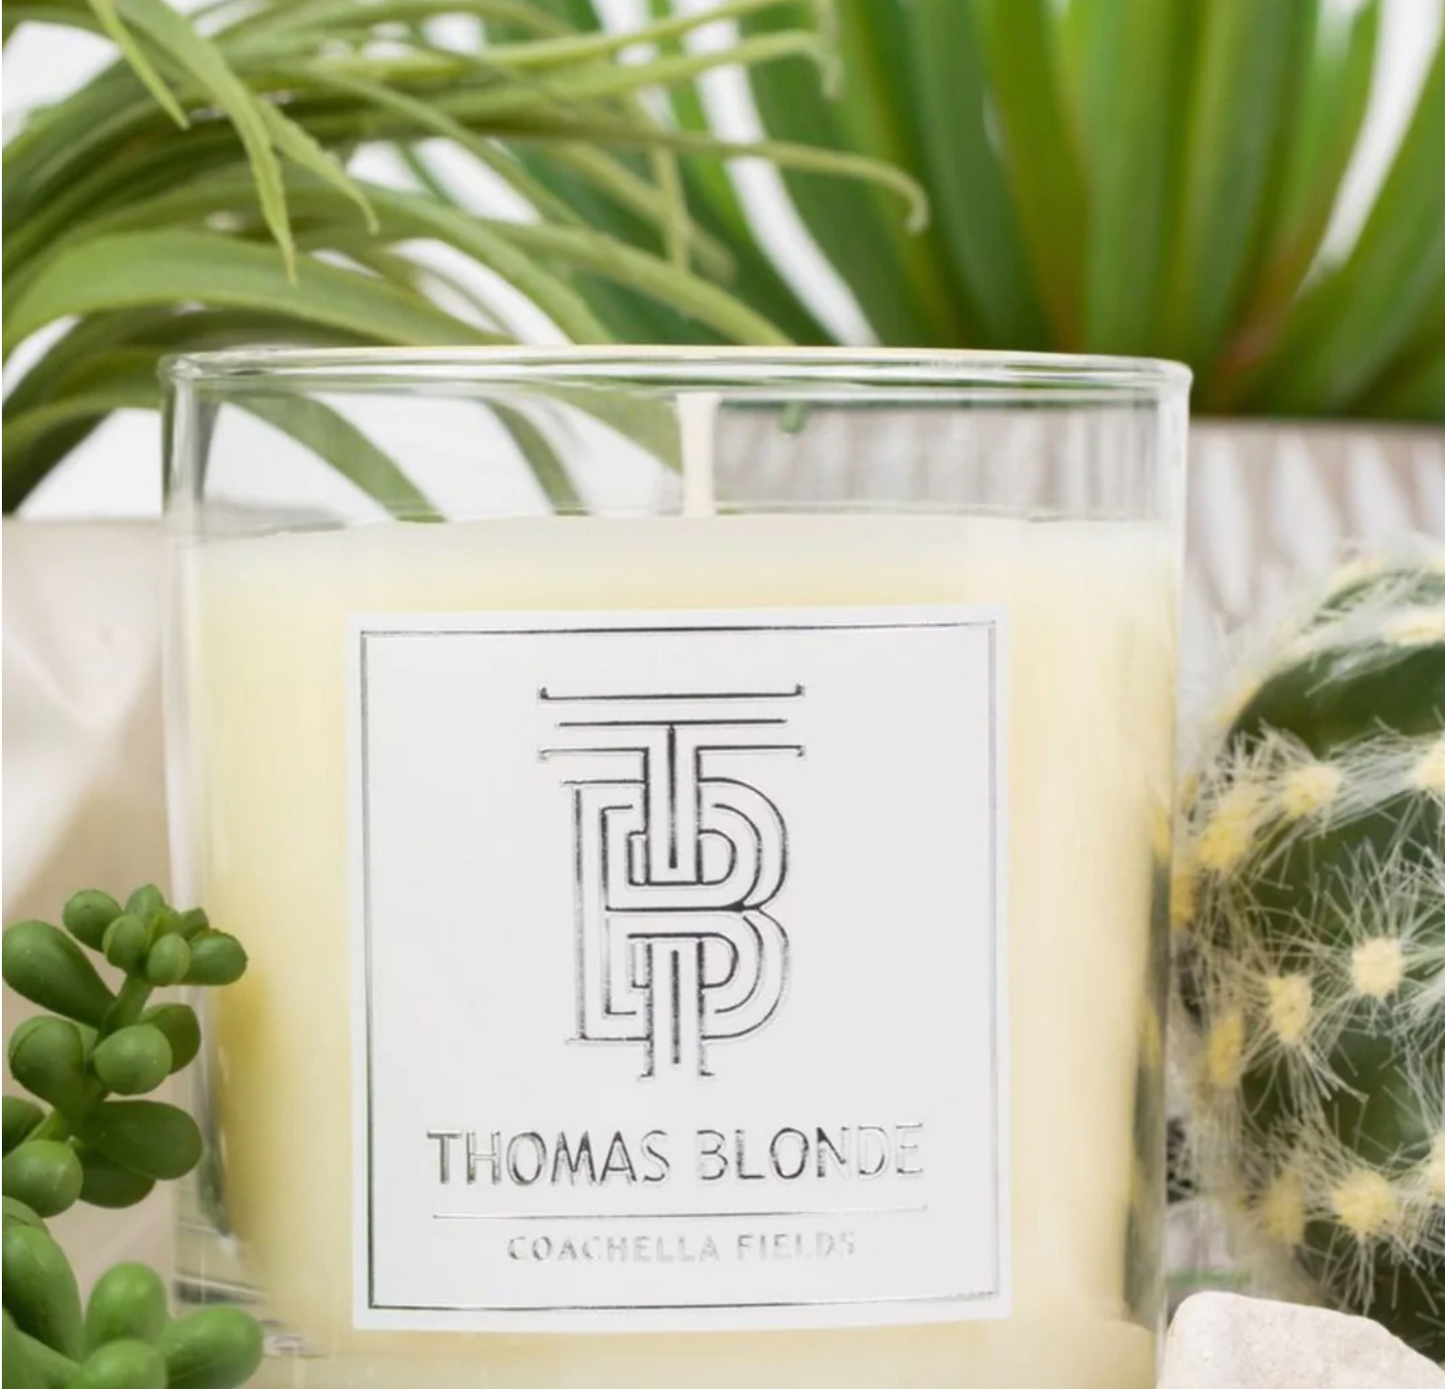 Thomas Blonde Coachella Fields Candle